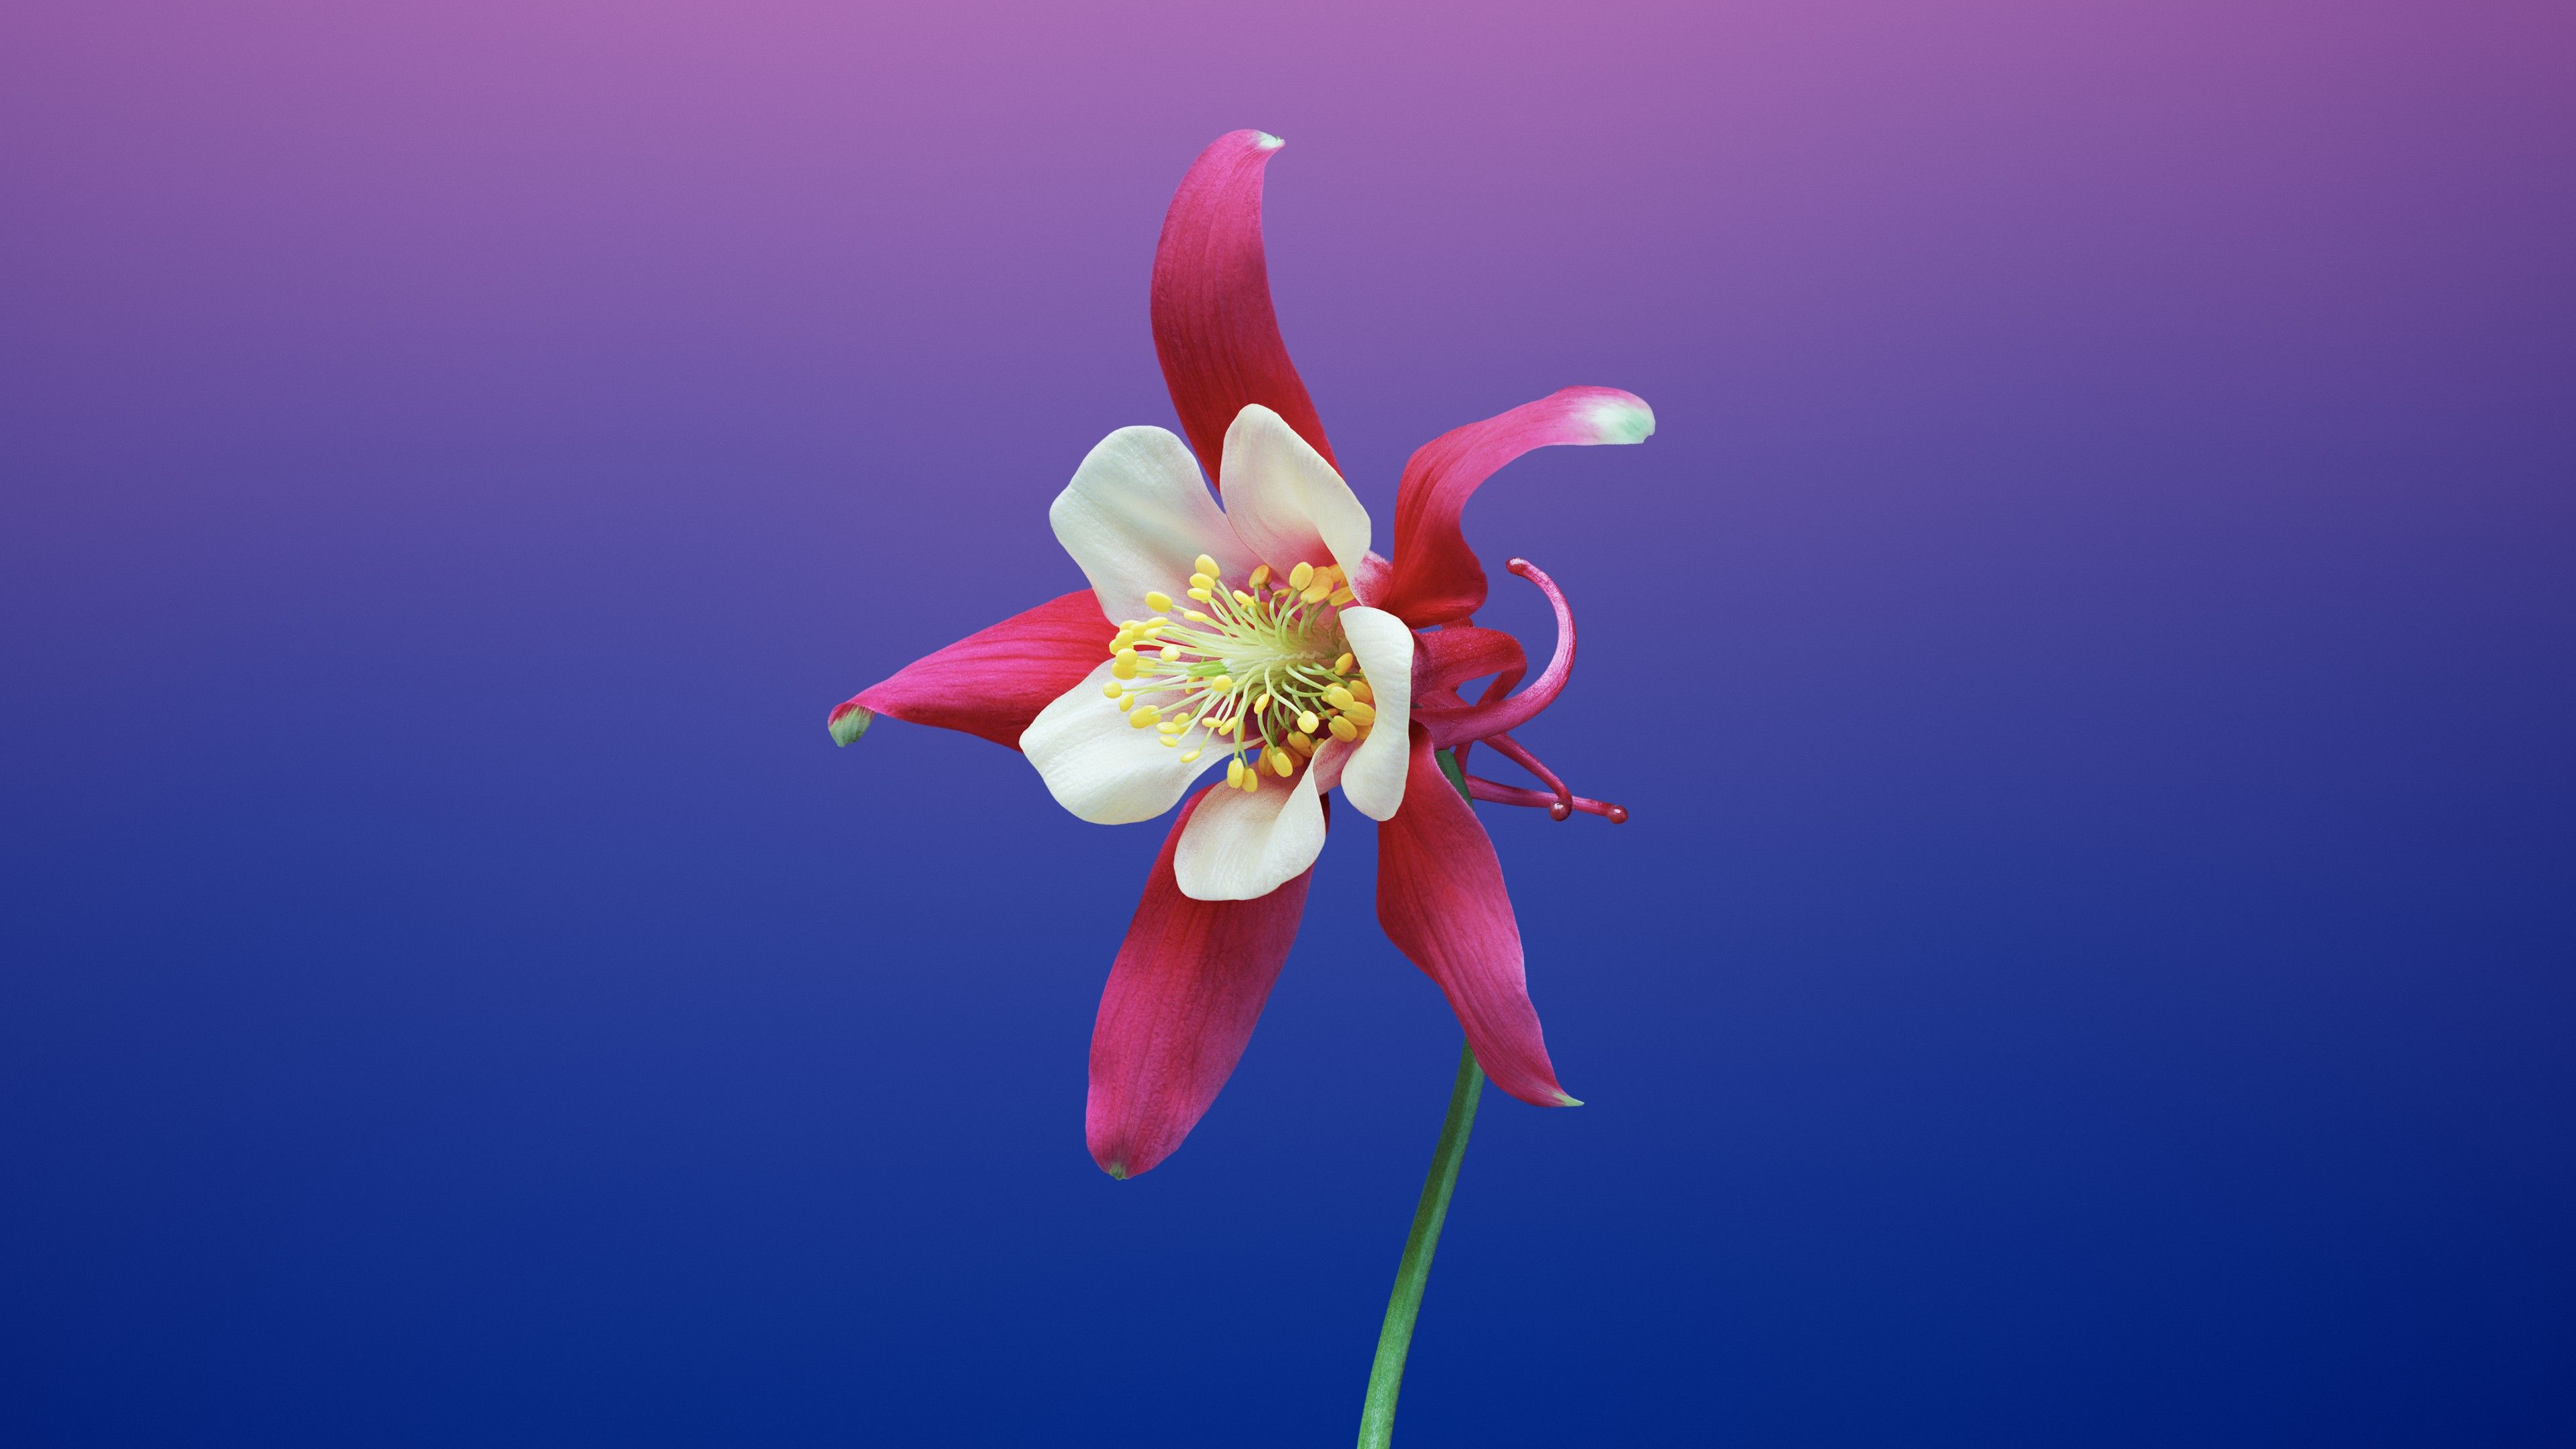 Aquilegia flower 4K Wallpaper, Gradient background, macOS Mojave, iOS Stock, HD, 5K, Flowers